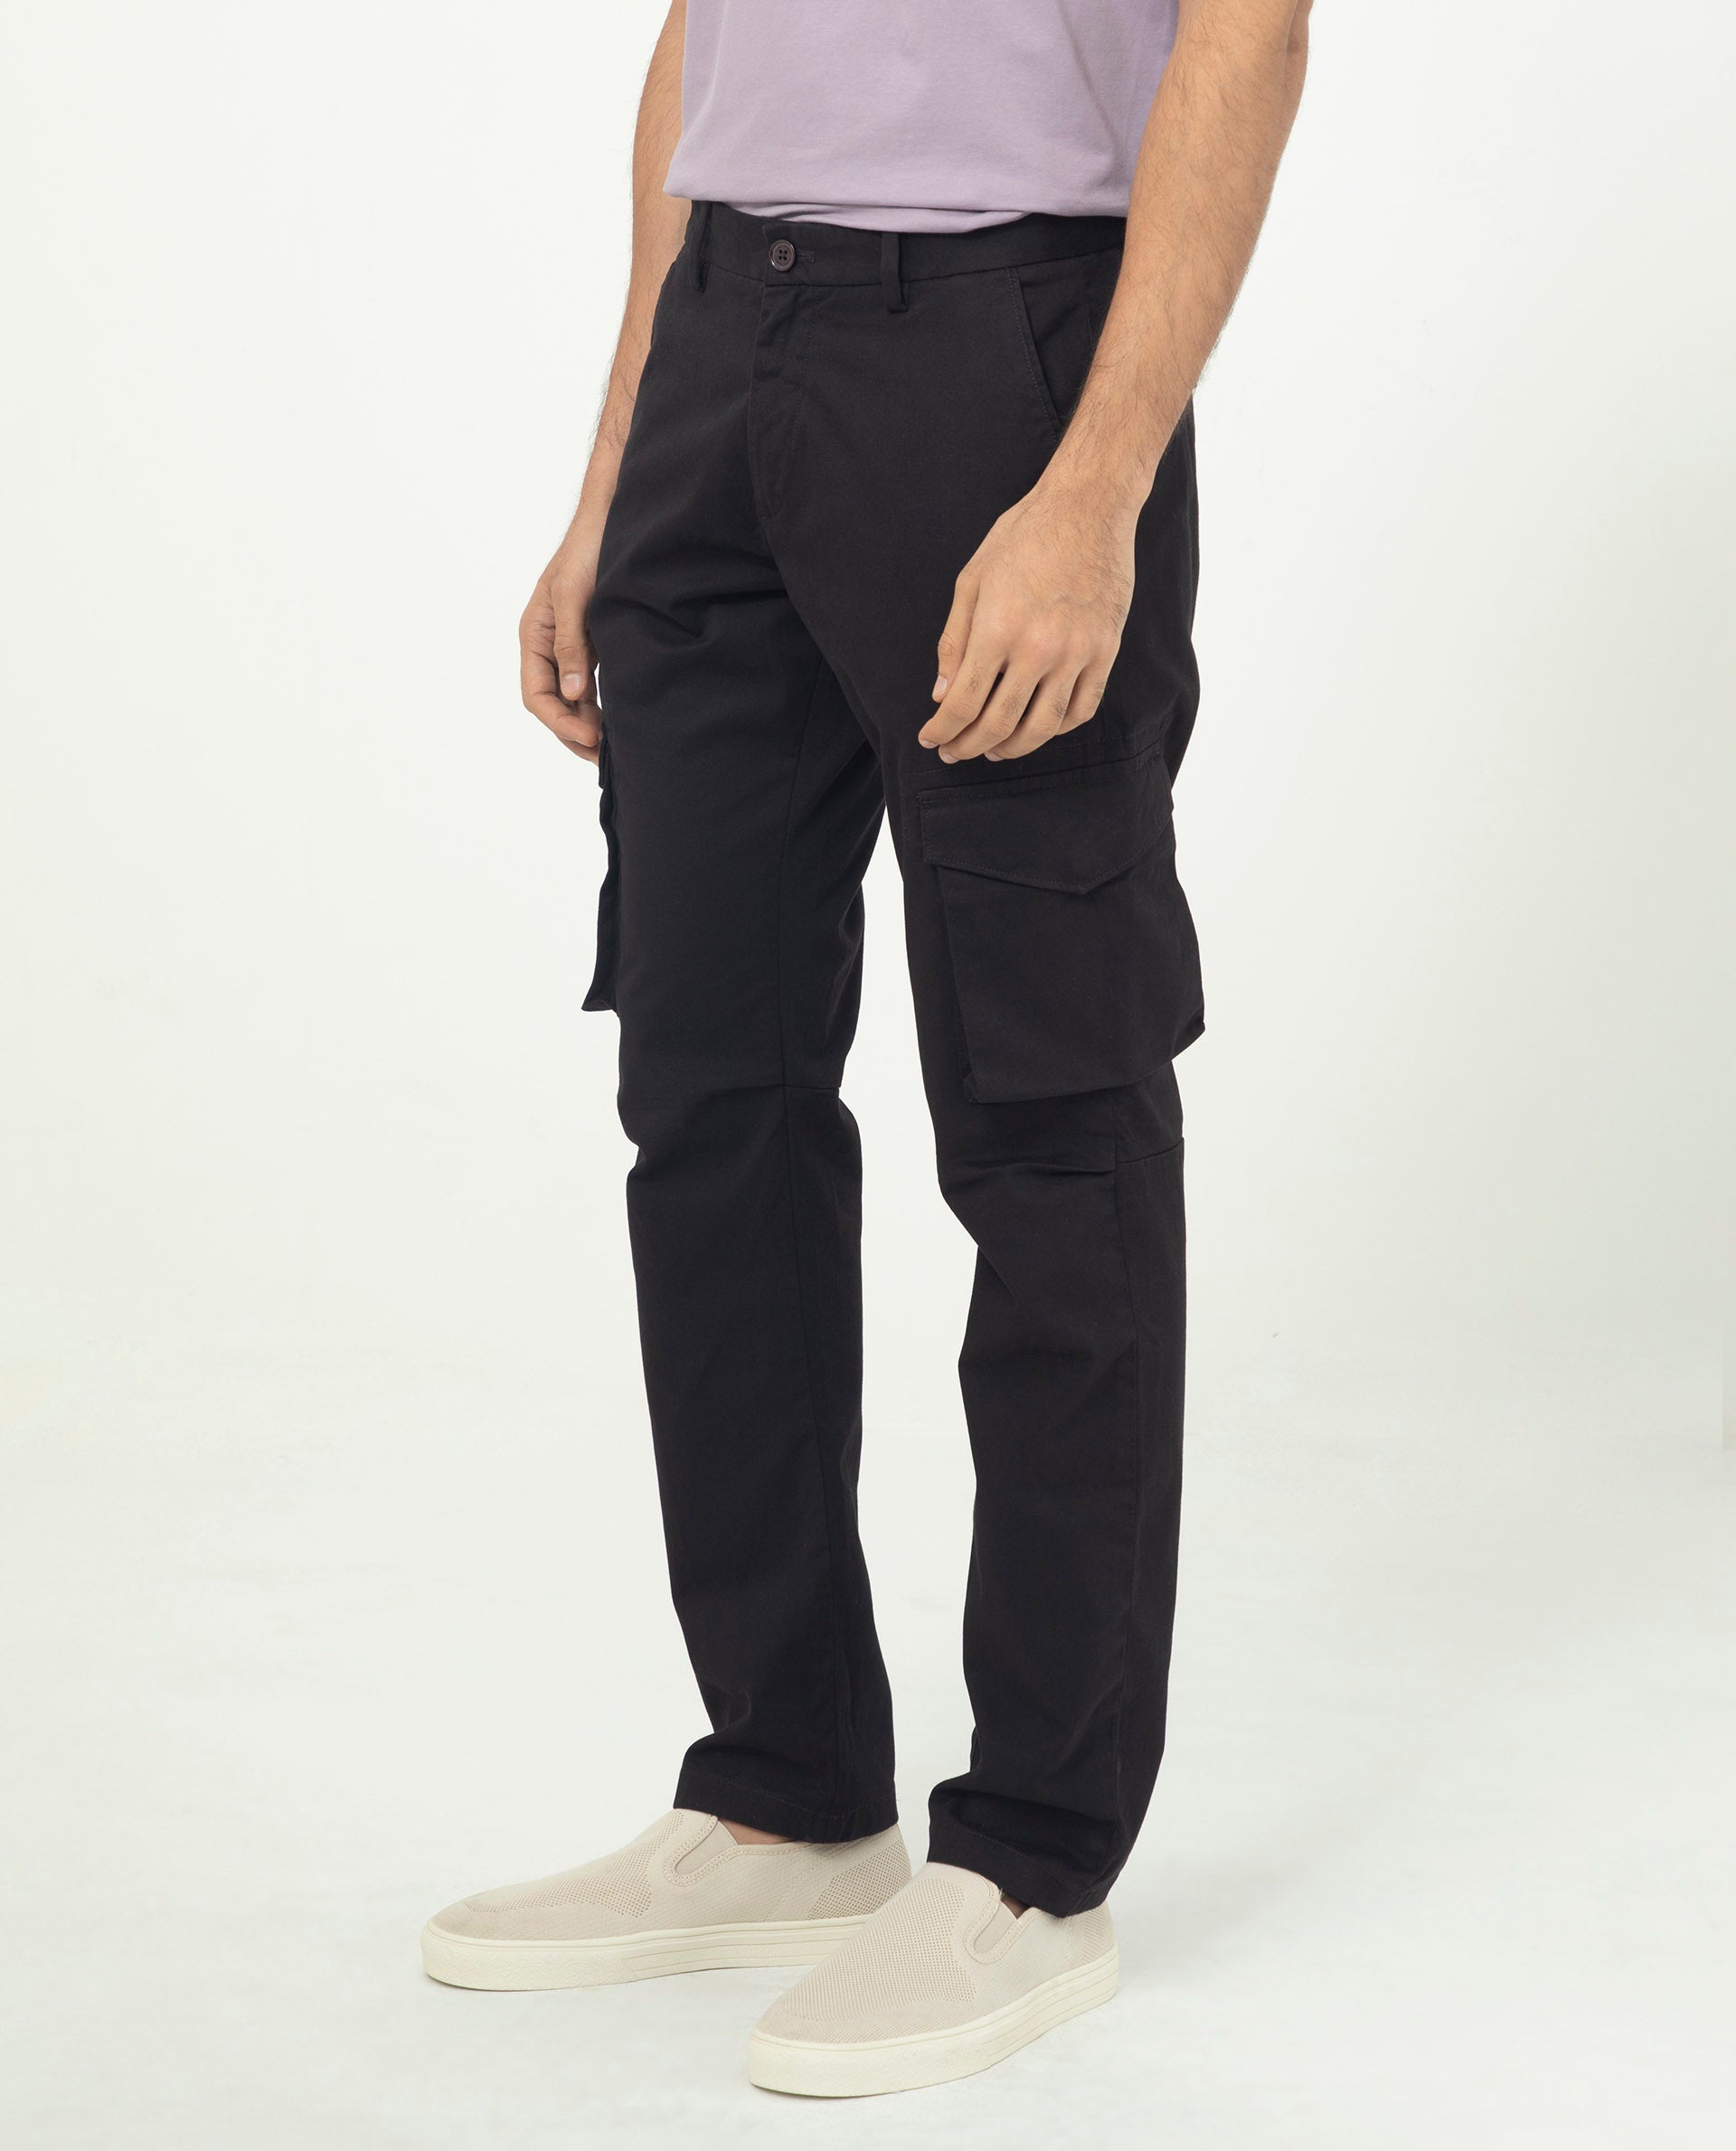 Long Work Pants Waterproof Quick Dry Trousers Mens Utility Black Nylon Slim  Cargo Pants  China Cargo Pants and Mens Cargo Pant price   MadeinChinacom